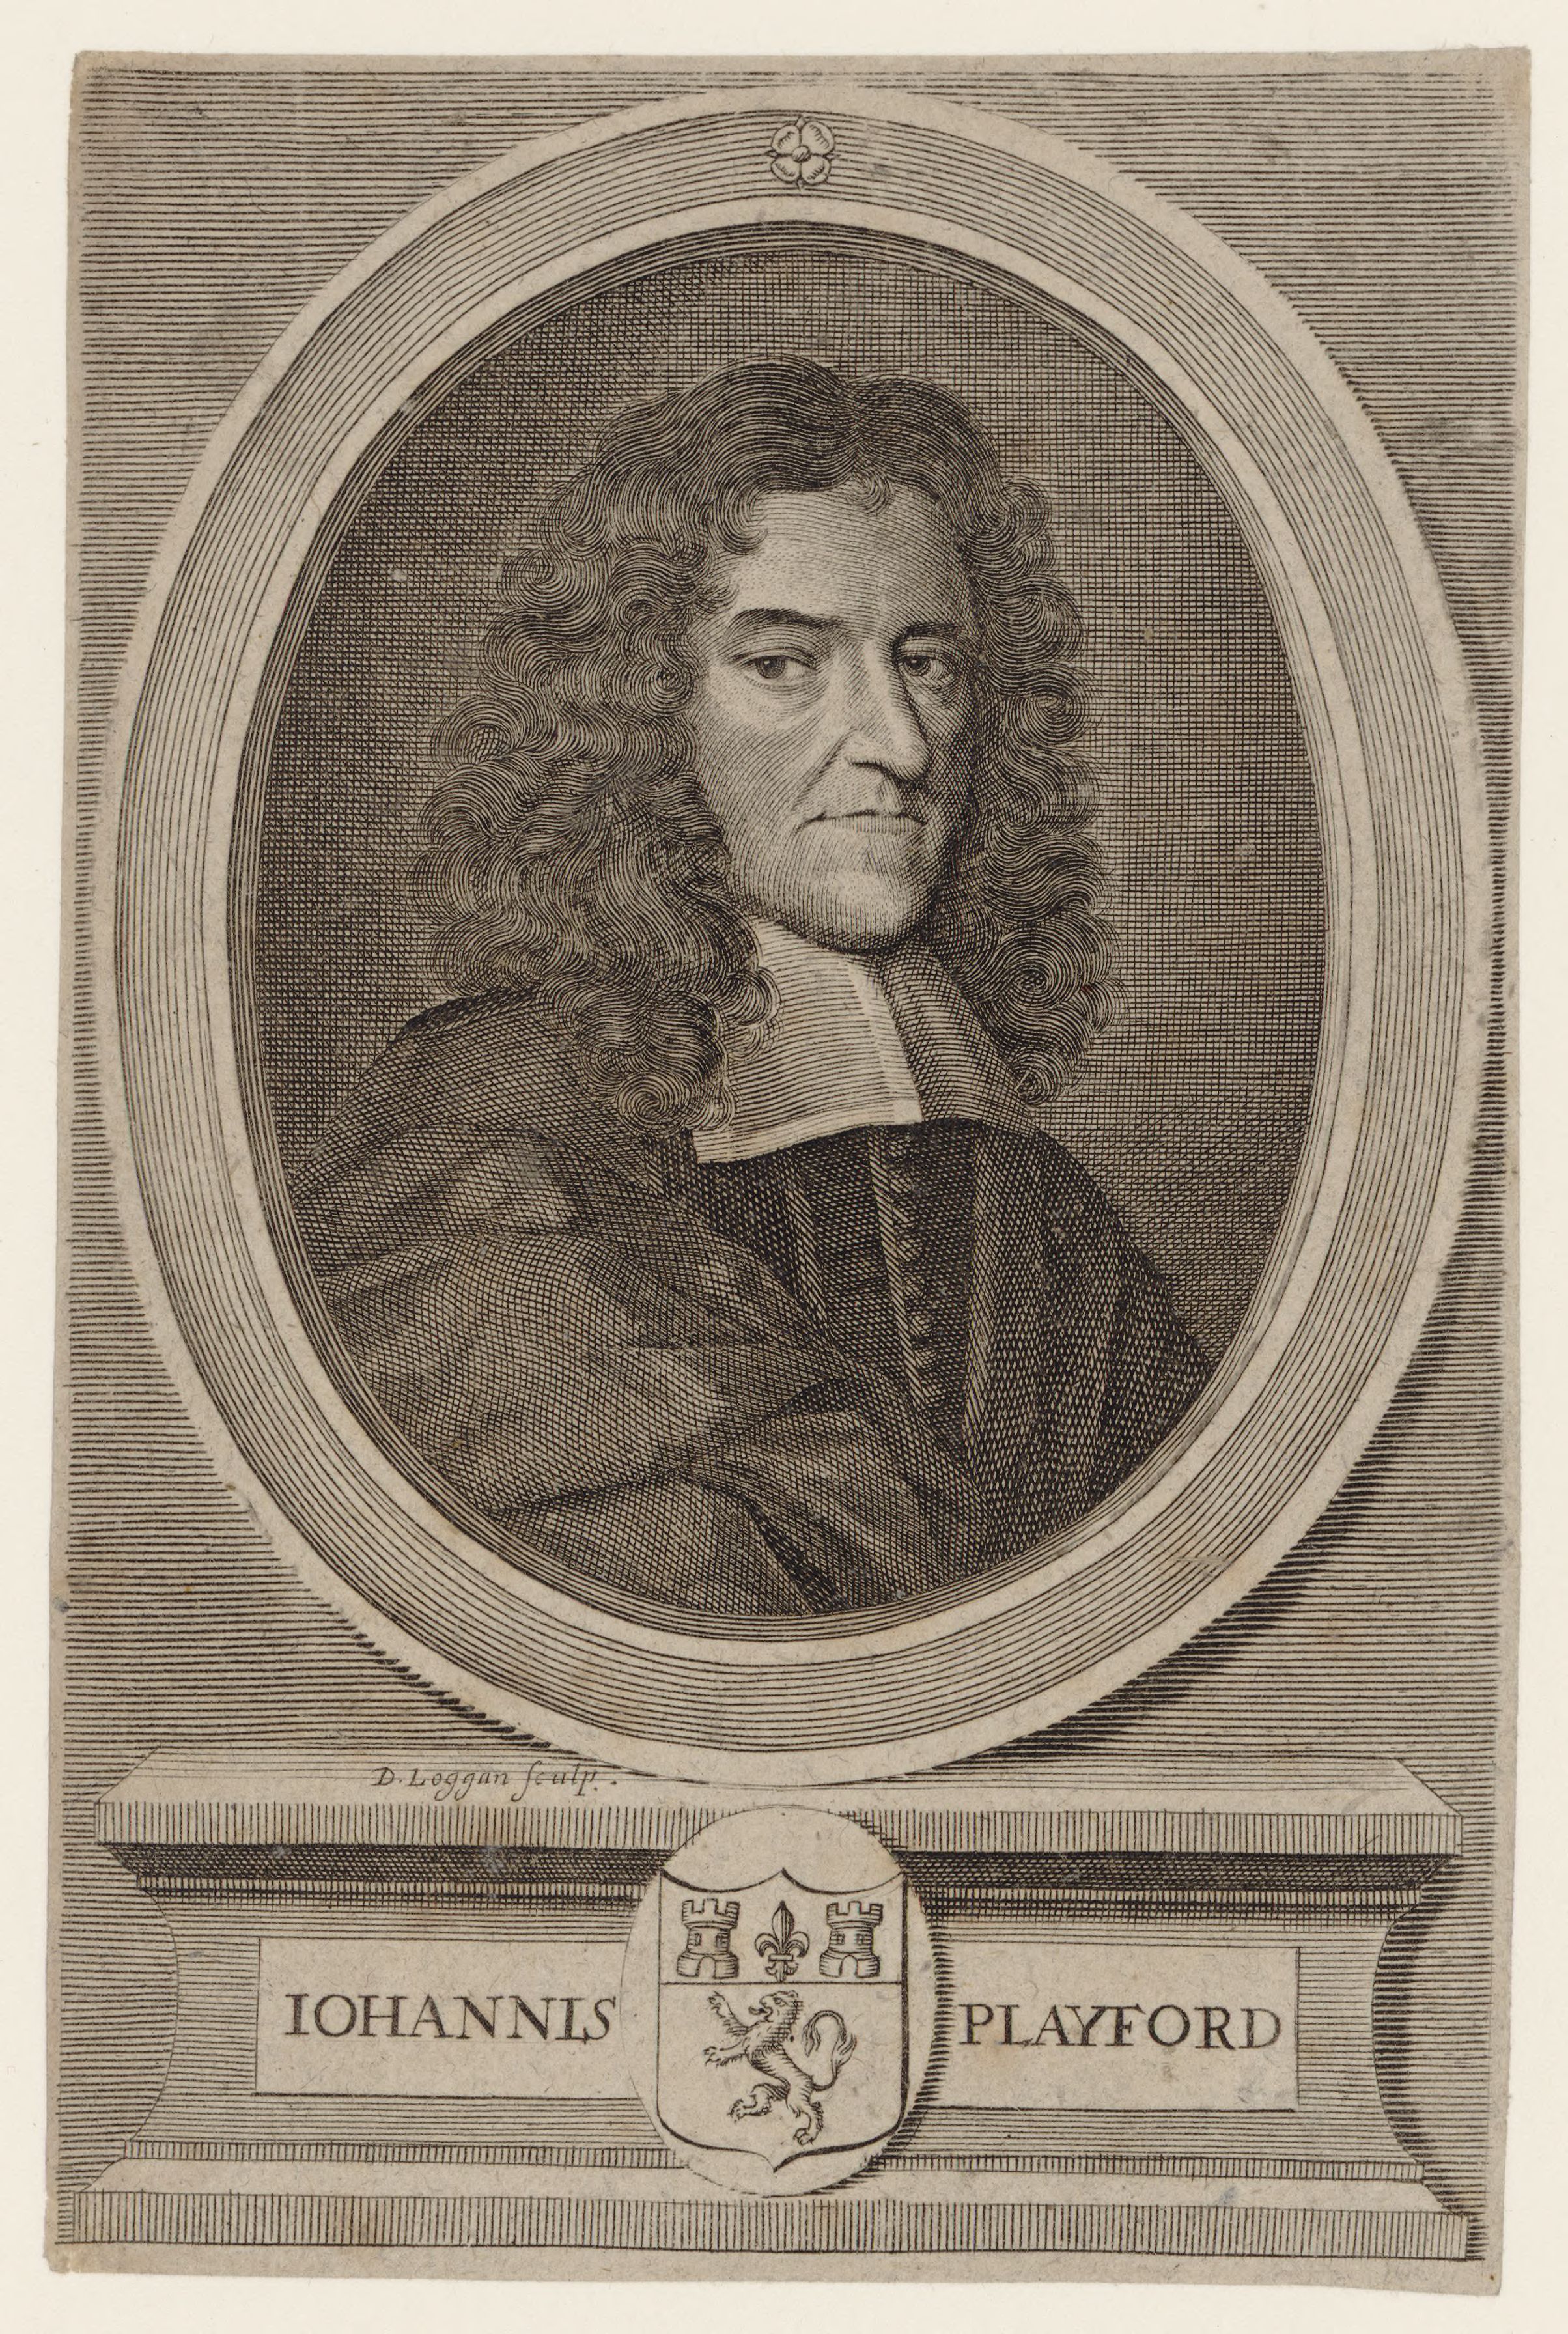 Portrait of John Playford by David Loggan